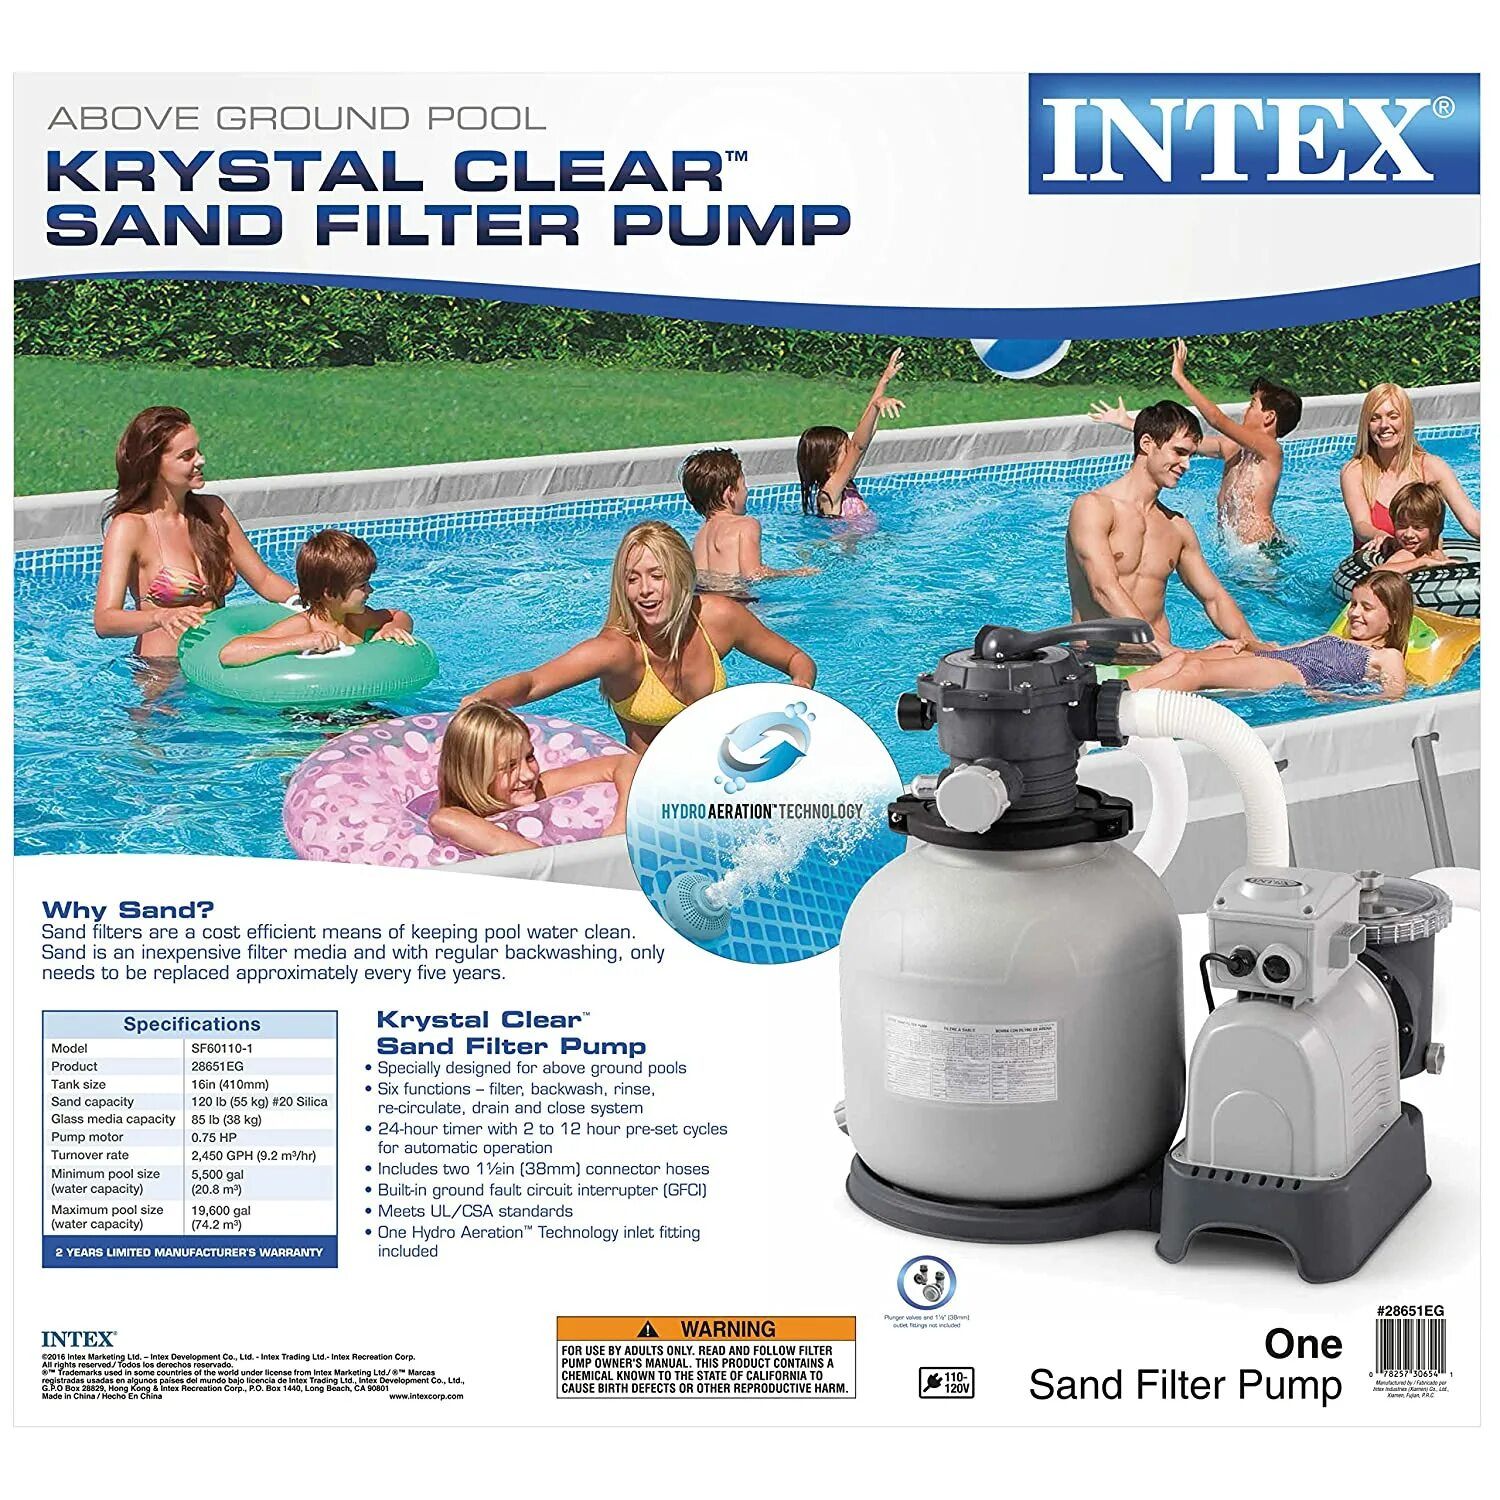 Intex krystal clear. Intex Krystal Clear Pool. Фильтр Интекс Krystal Clear. Intex Sand Filter Pump manual. Above ground Pool фильтр.